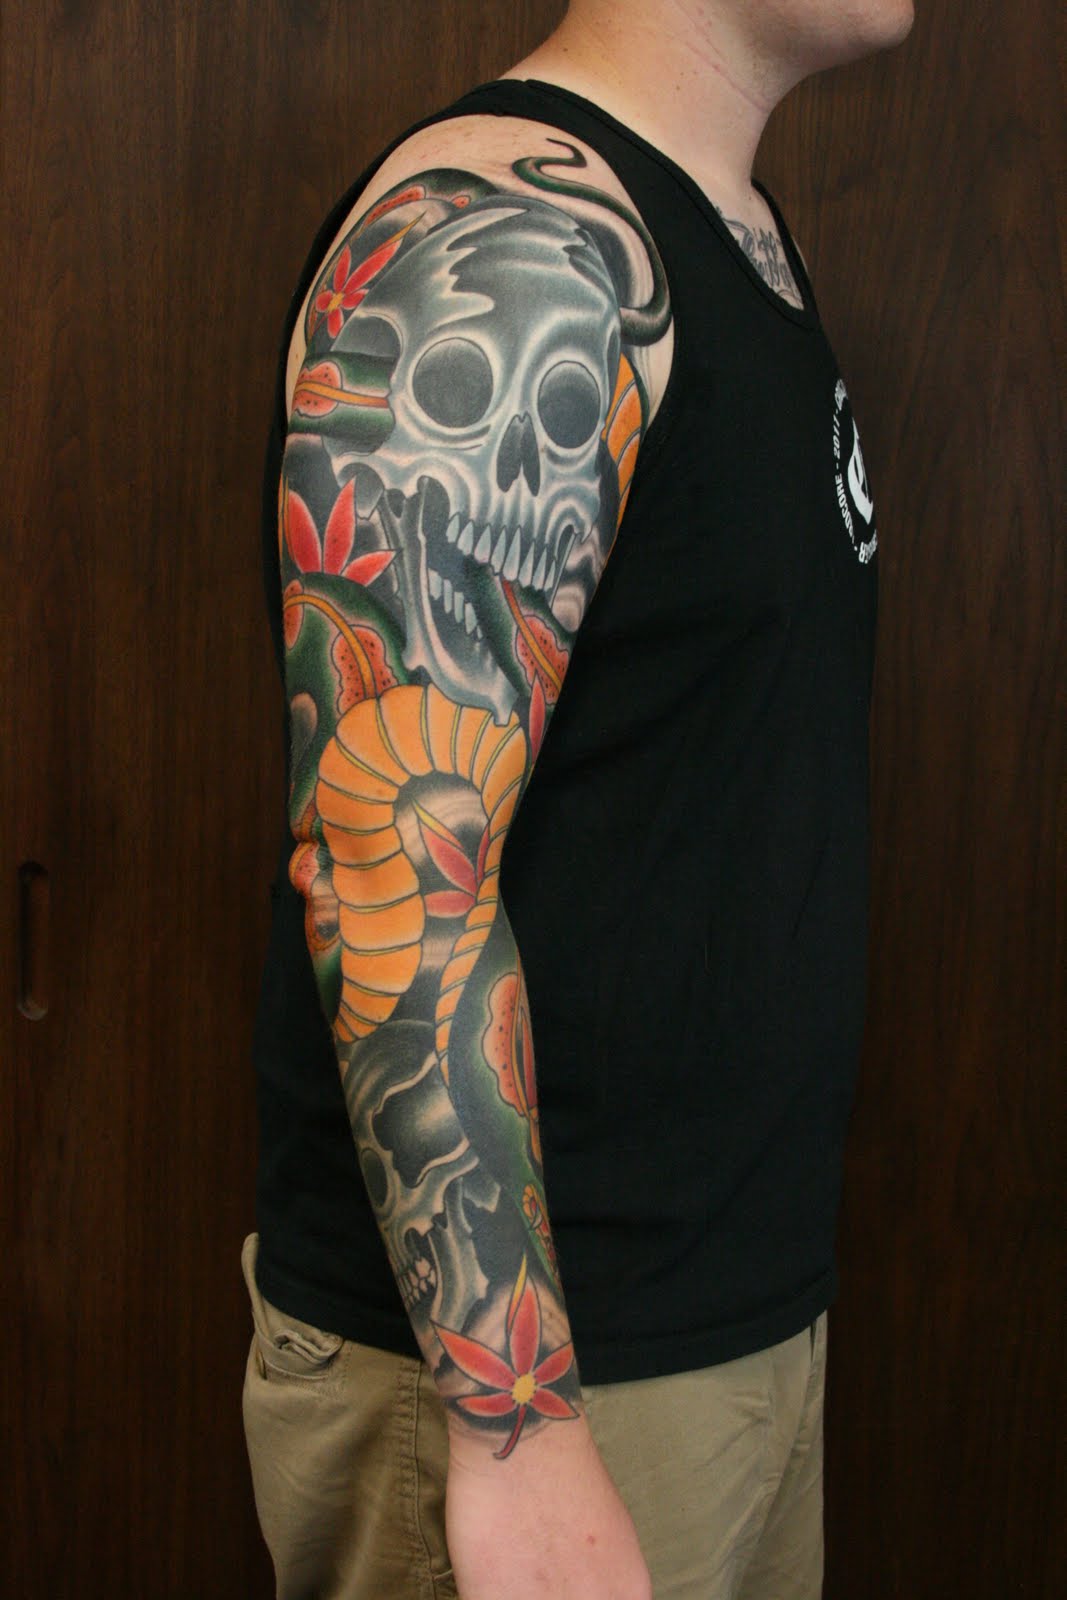 Awesome Sleeve Tattoo Design Ideas - The Xerxes